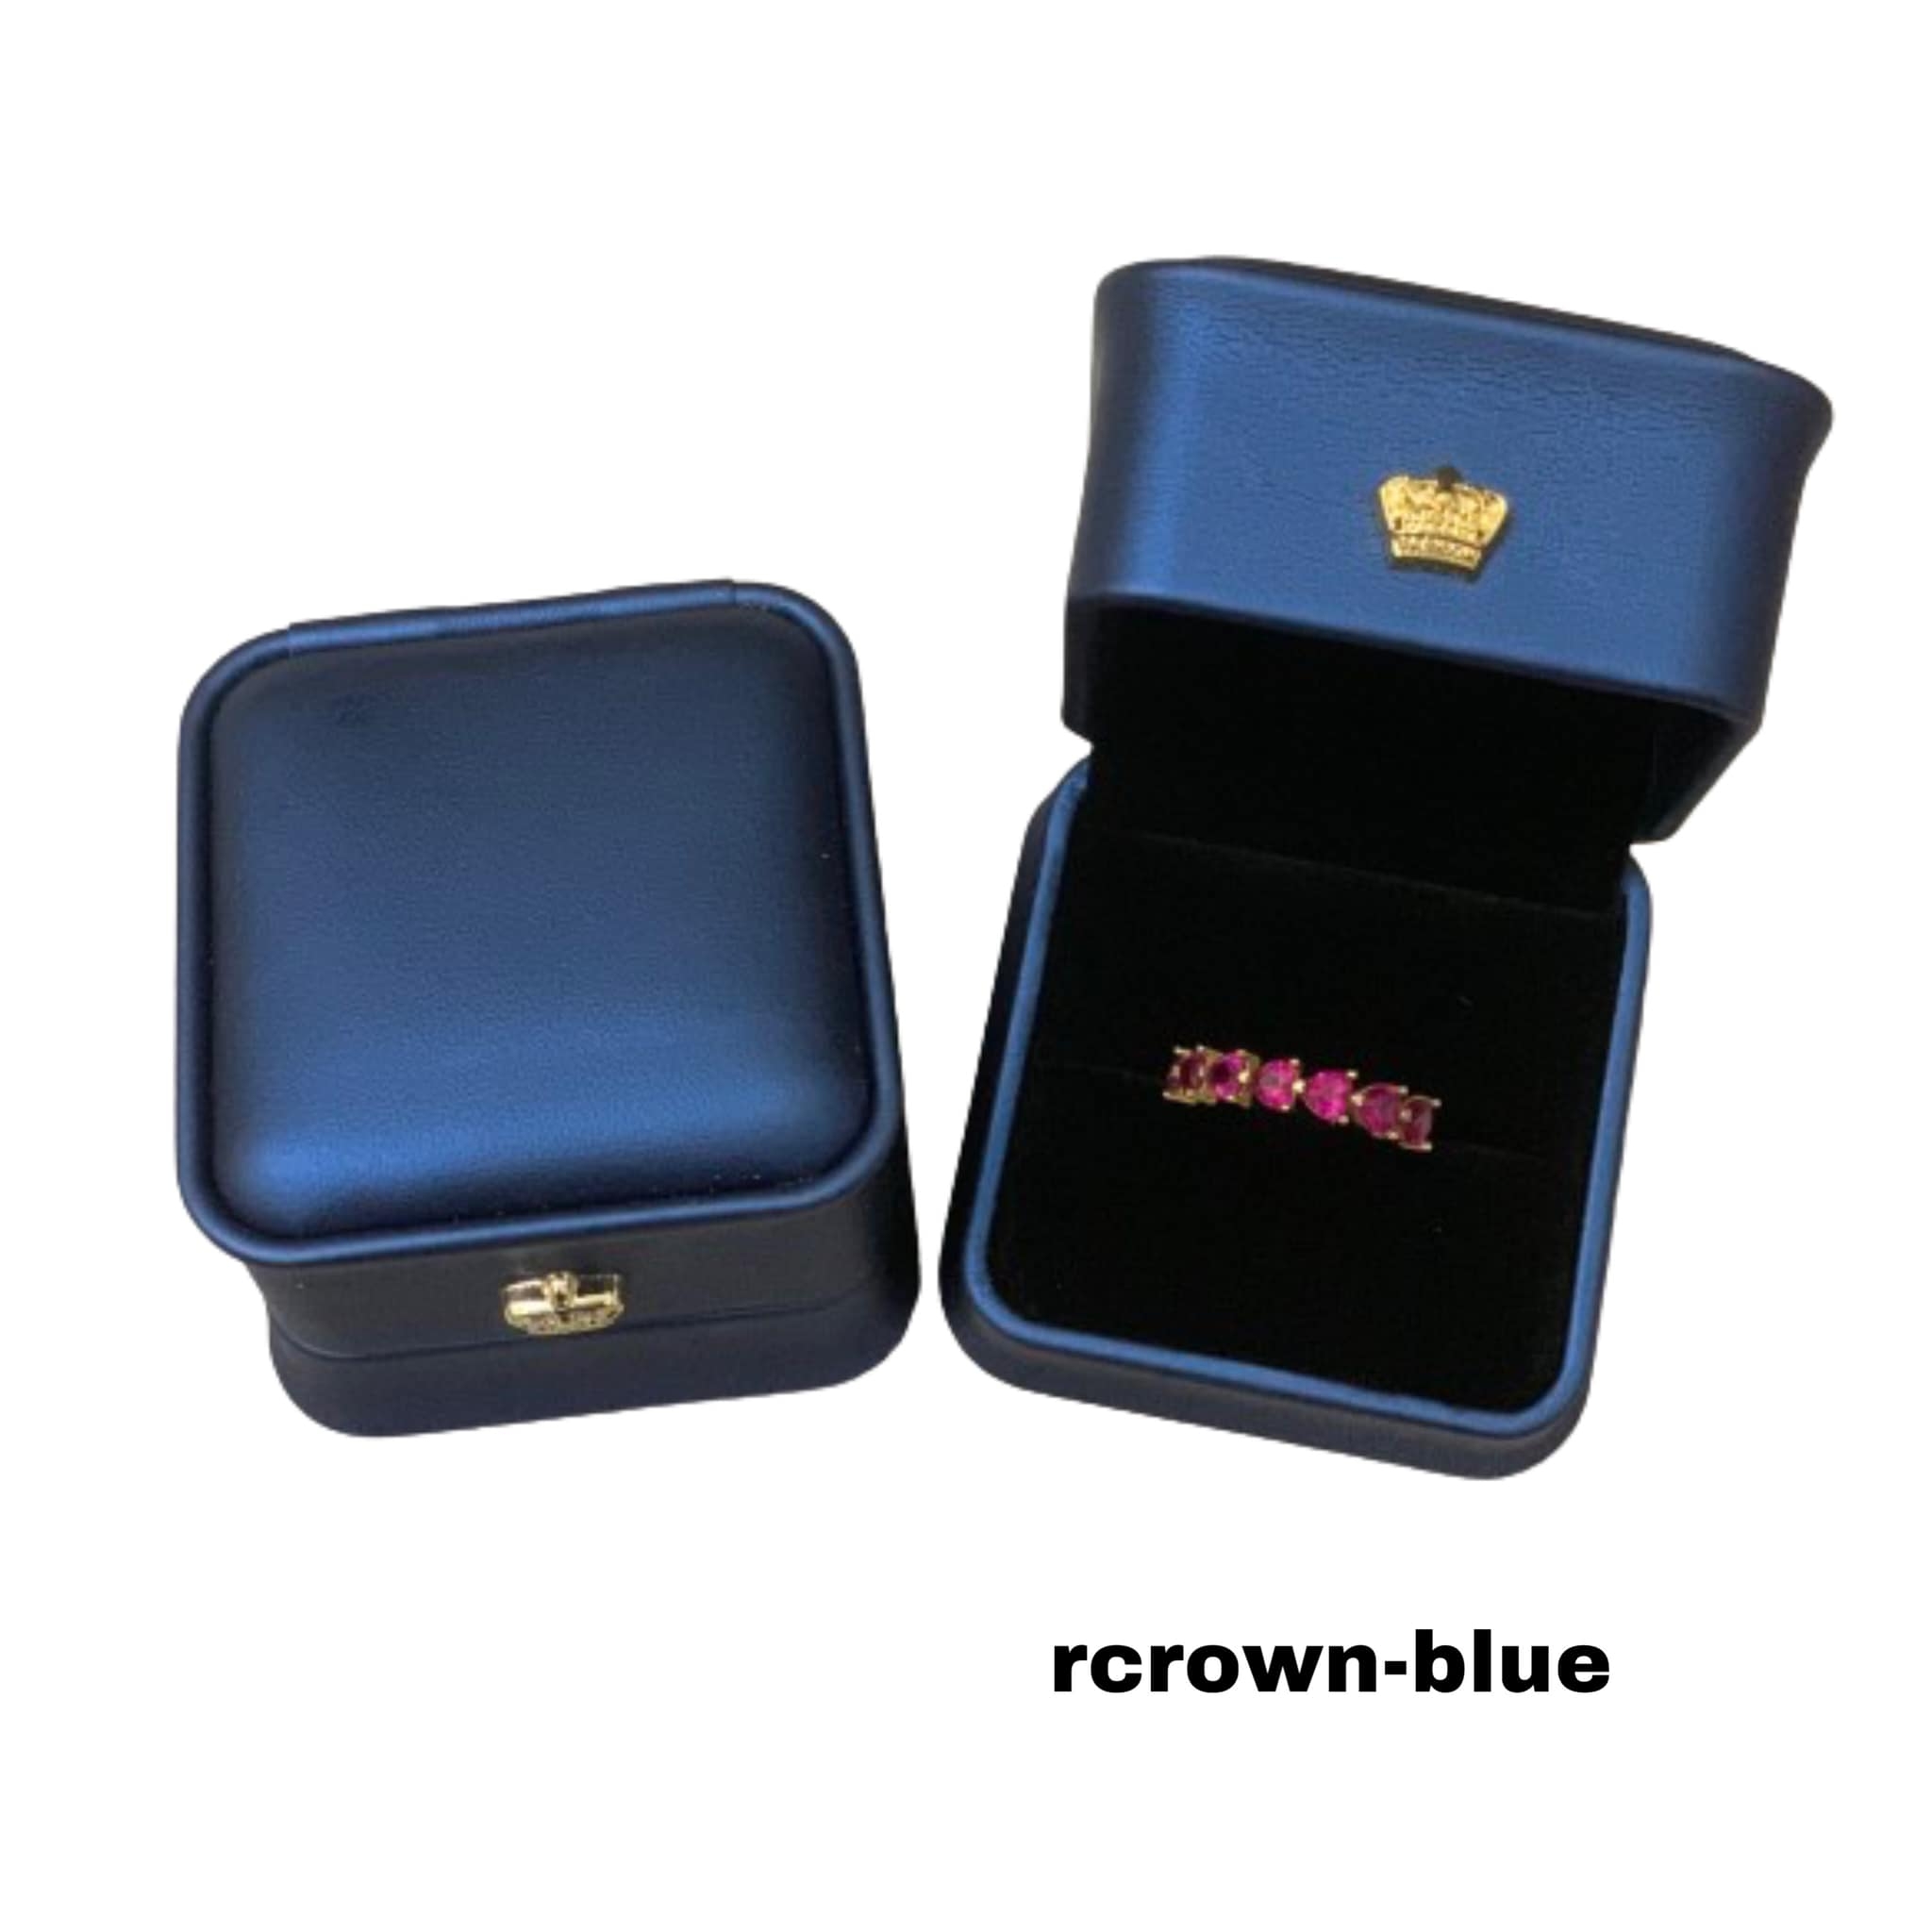 rcrown-blue